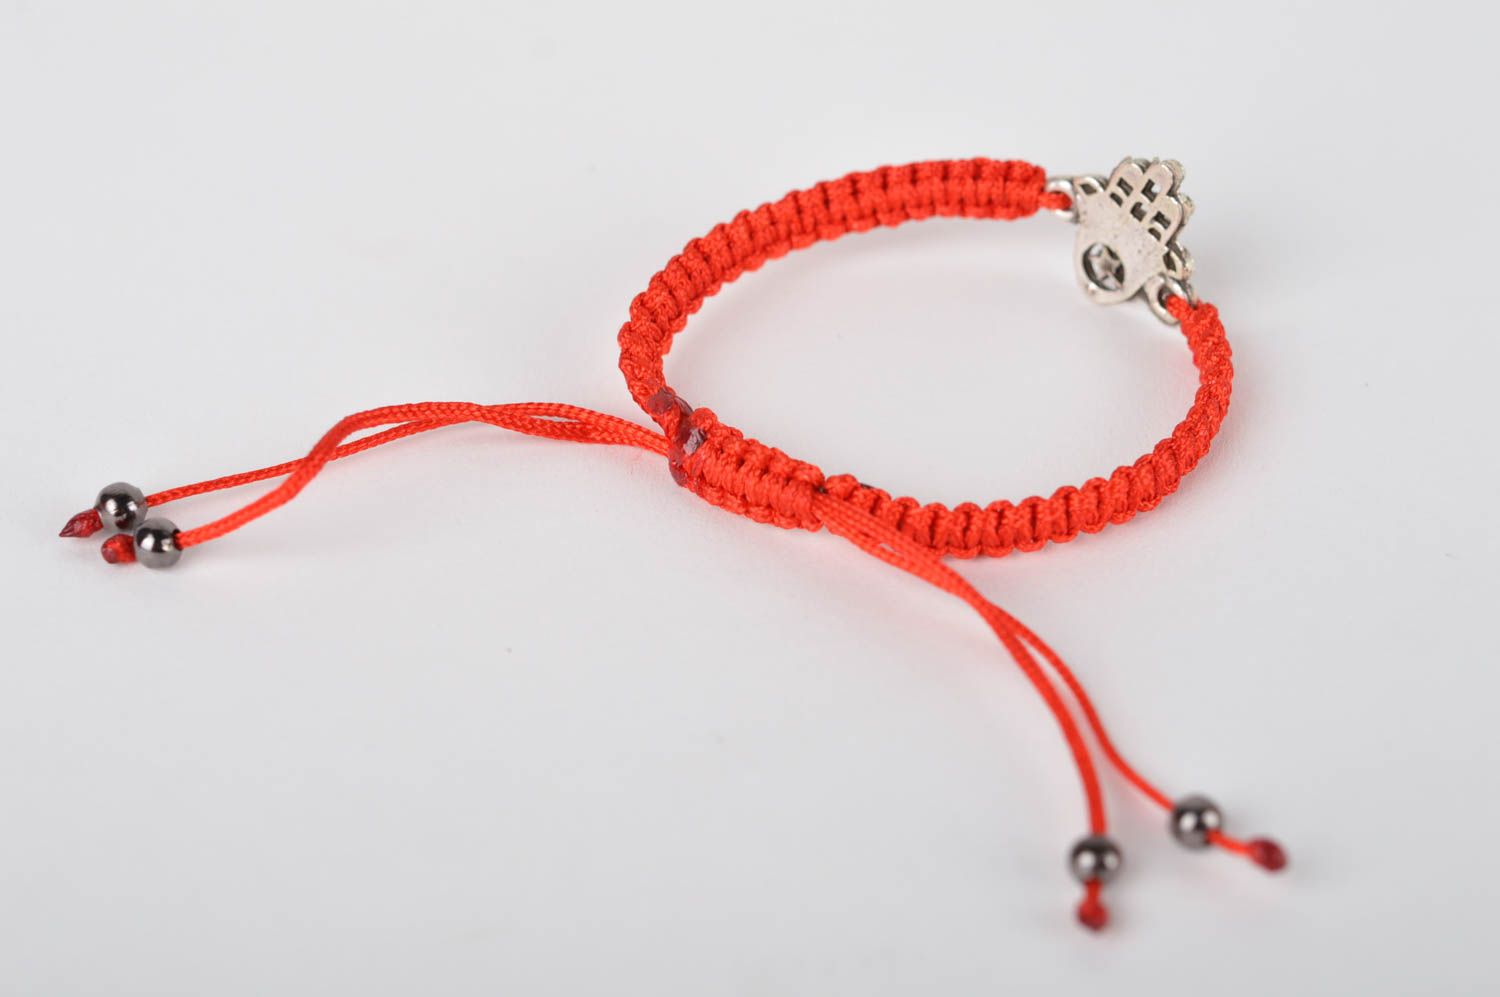 Unusual handmade wrist bracelet fashion tips string bracelet designs gift ideas photo 4